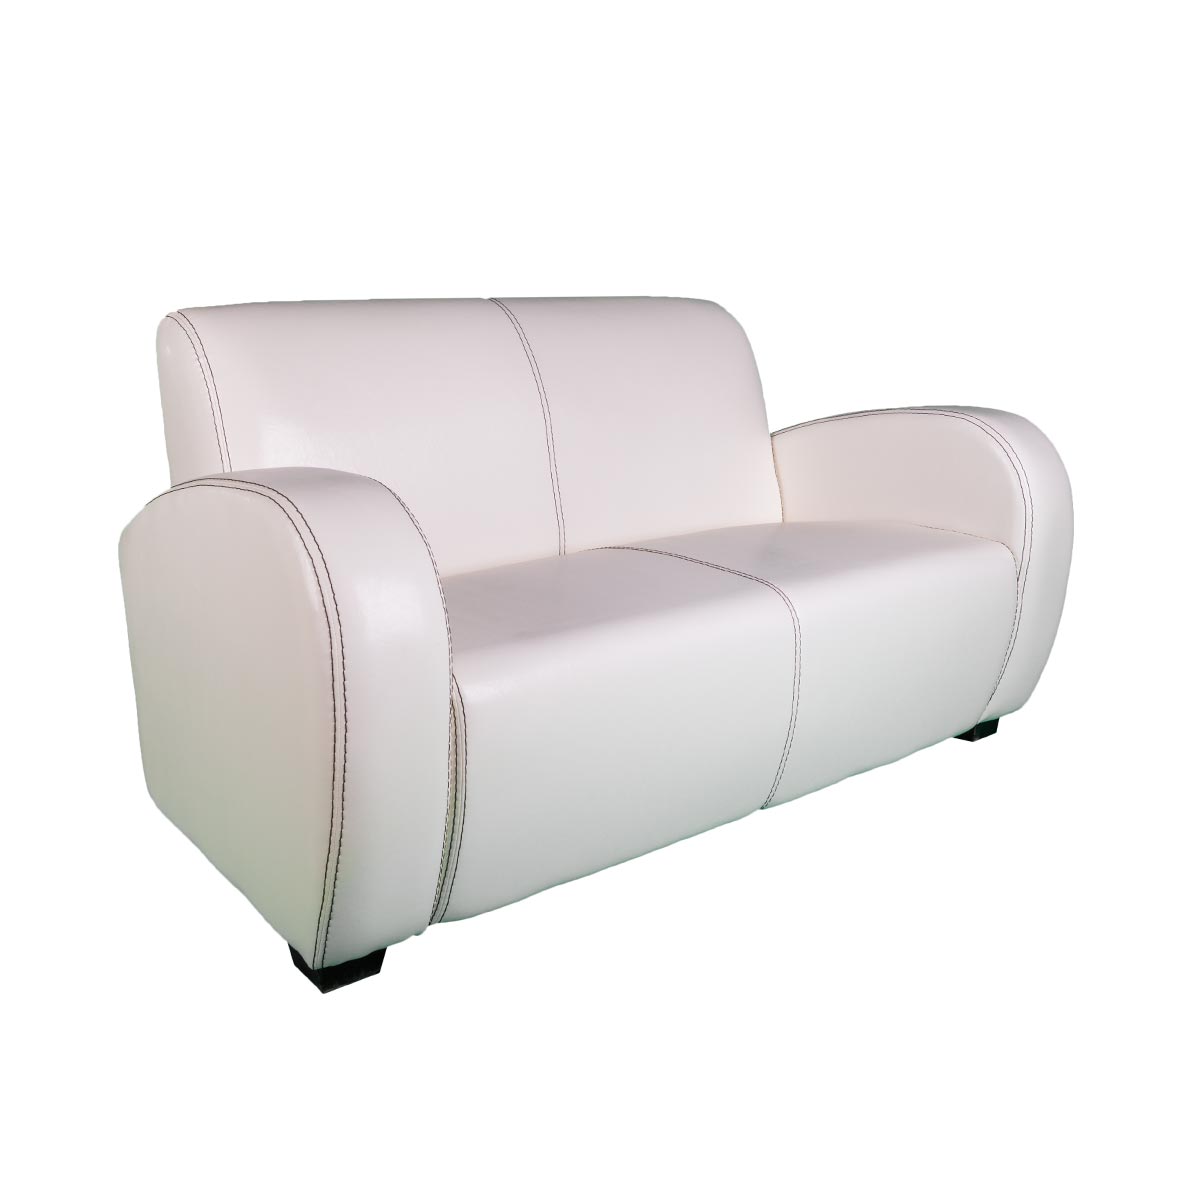 sofe-4028-roma-2-seating